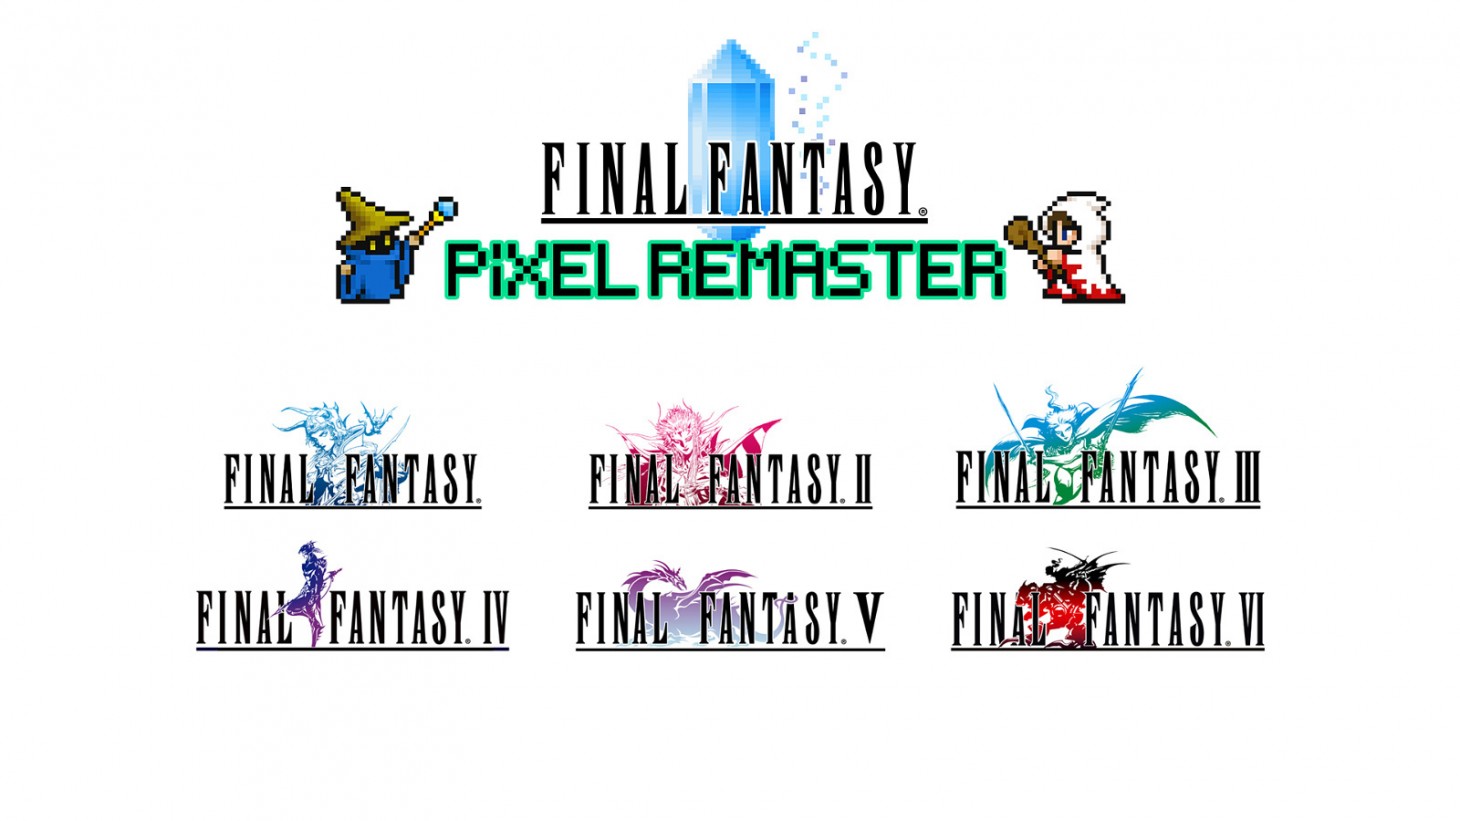 Final Fantasy I am to VI get a Pixel remaster series